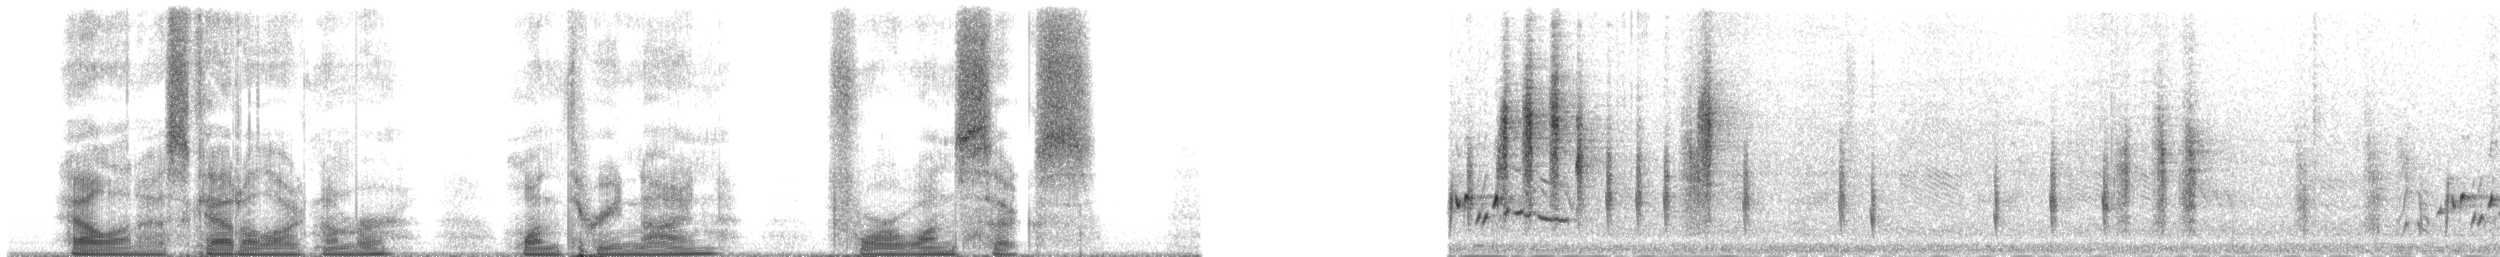 Ak Karınlı Çıtkuşu [leucogastra grubu] - ML139416